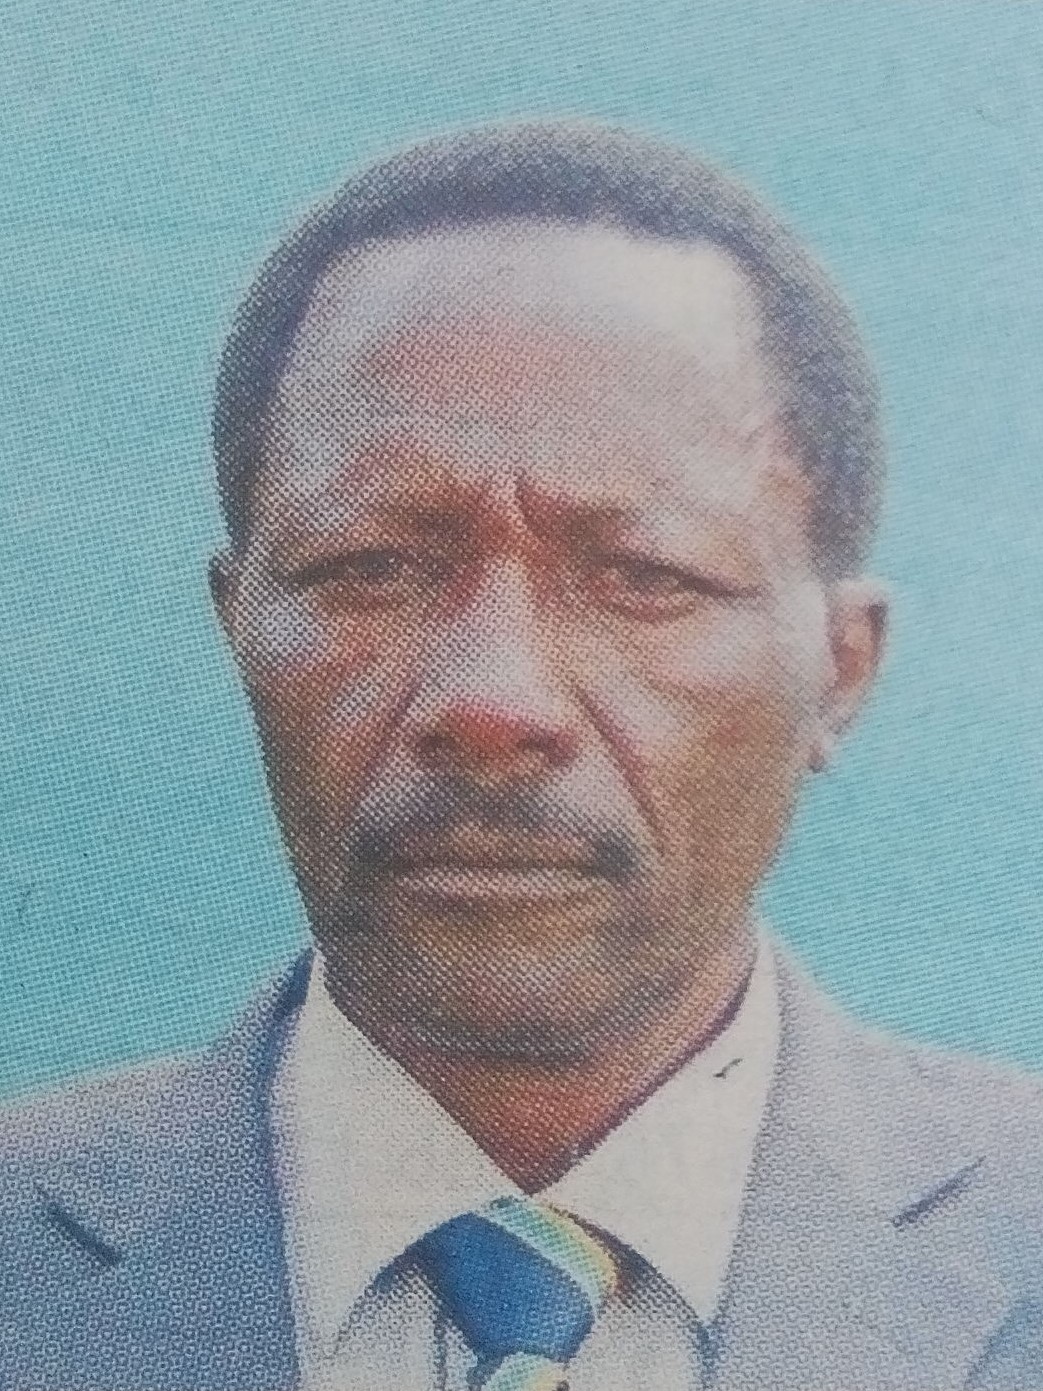 Obituary Image of Richard Kipchirchir Ngeno